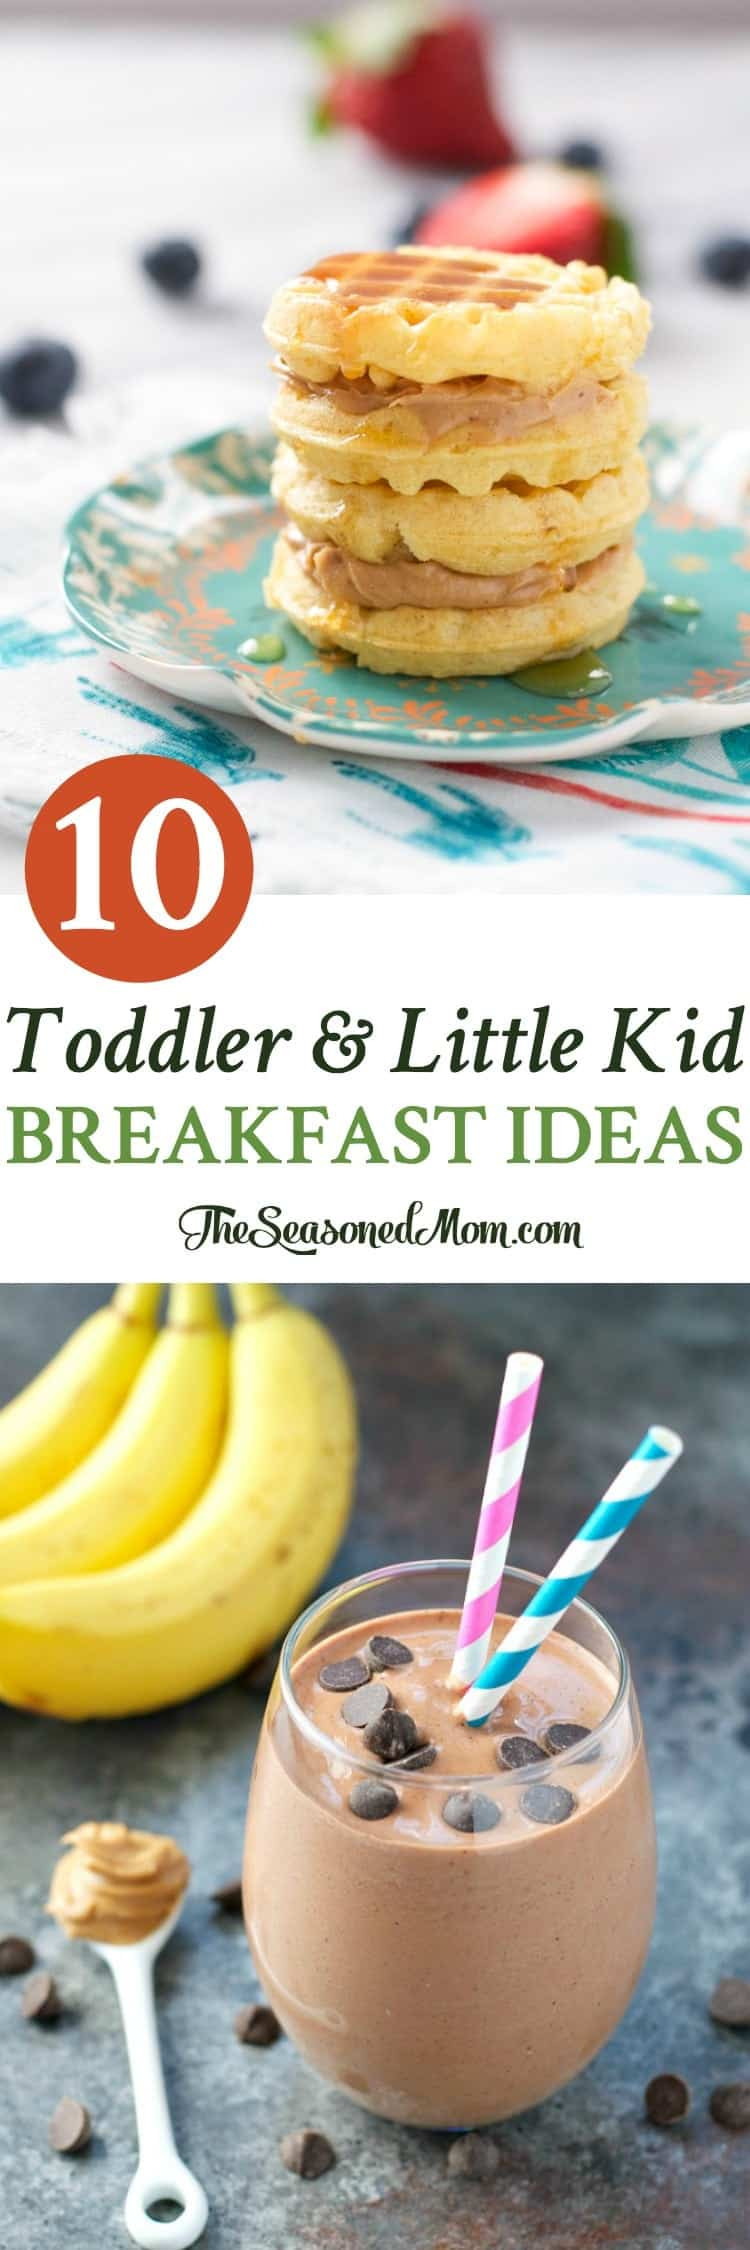 Healthy Breakfast For Children
 10 Toddler and Little Kid Breakfast Ideas The Seasoned Mom